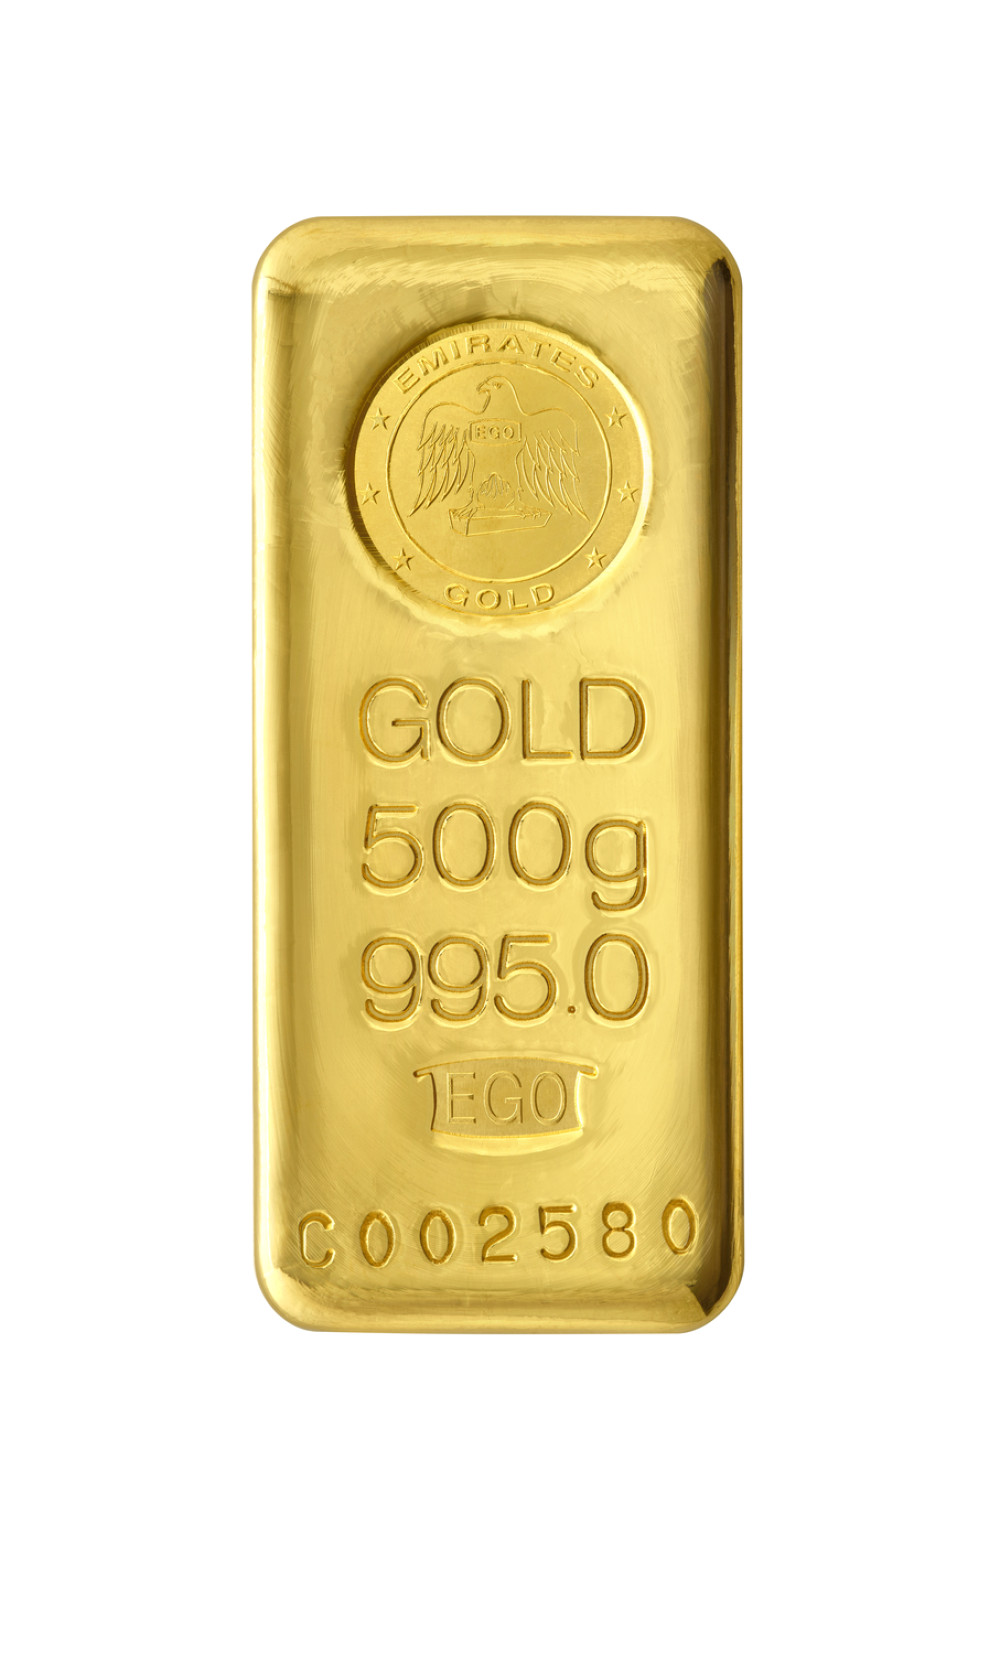 500 gram Gold Bar 995.0 - EMIRATES GOLD